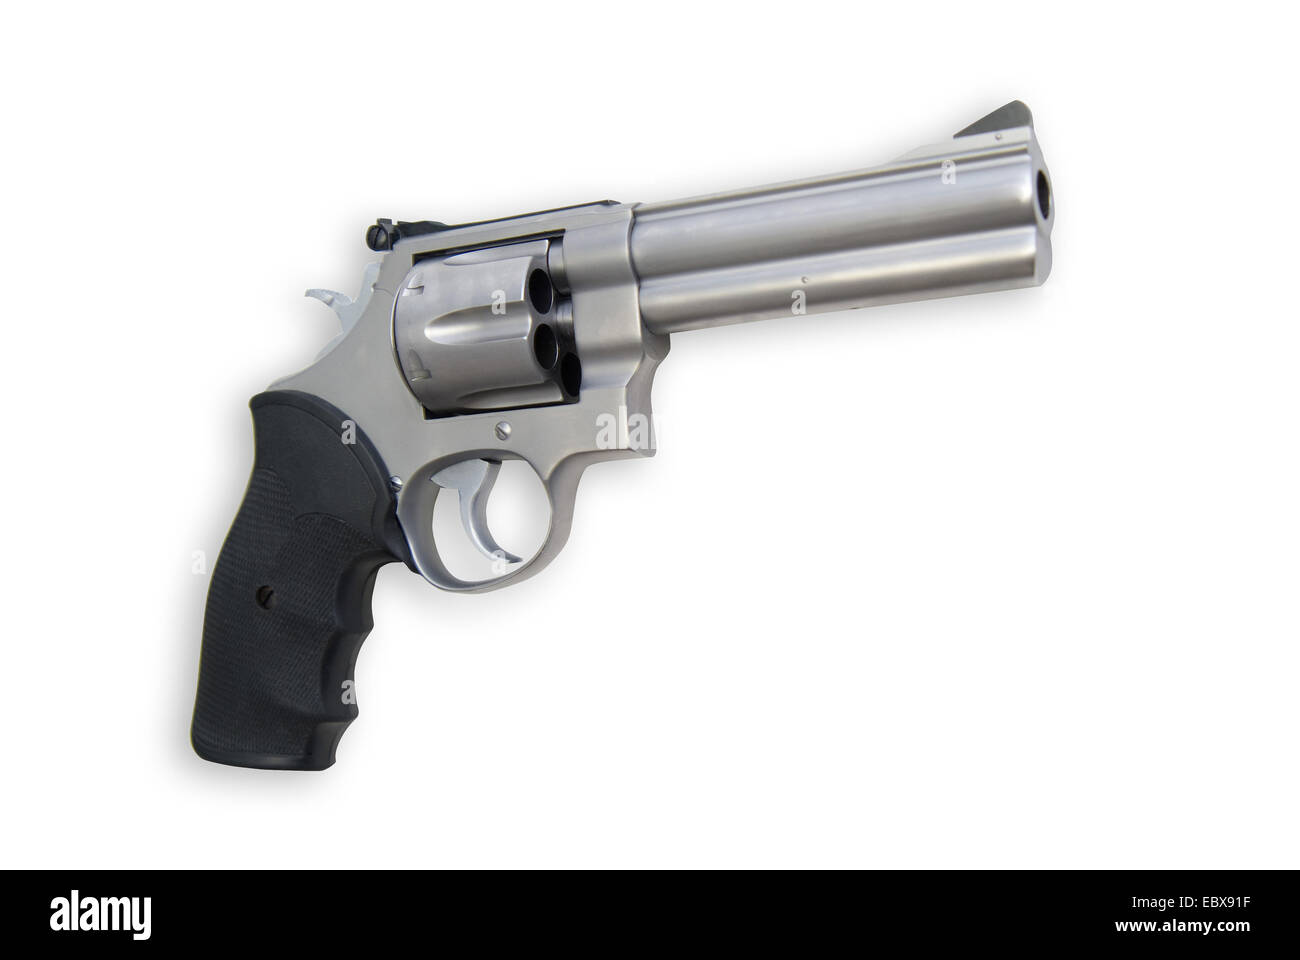 pistol 45 caliber Stock Photo